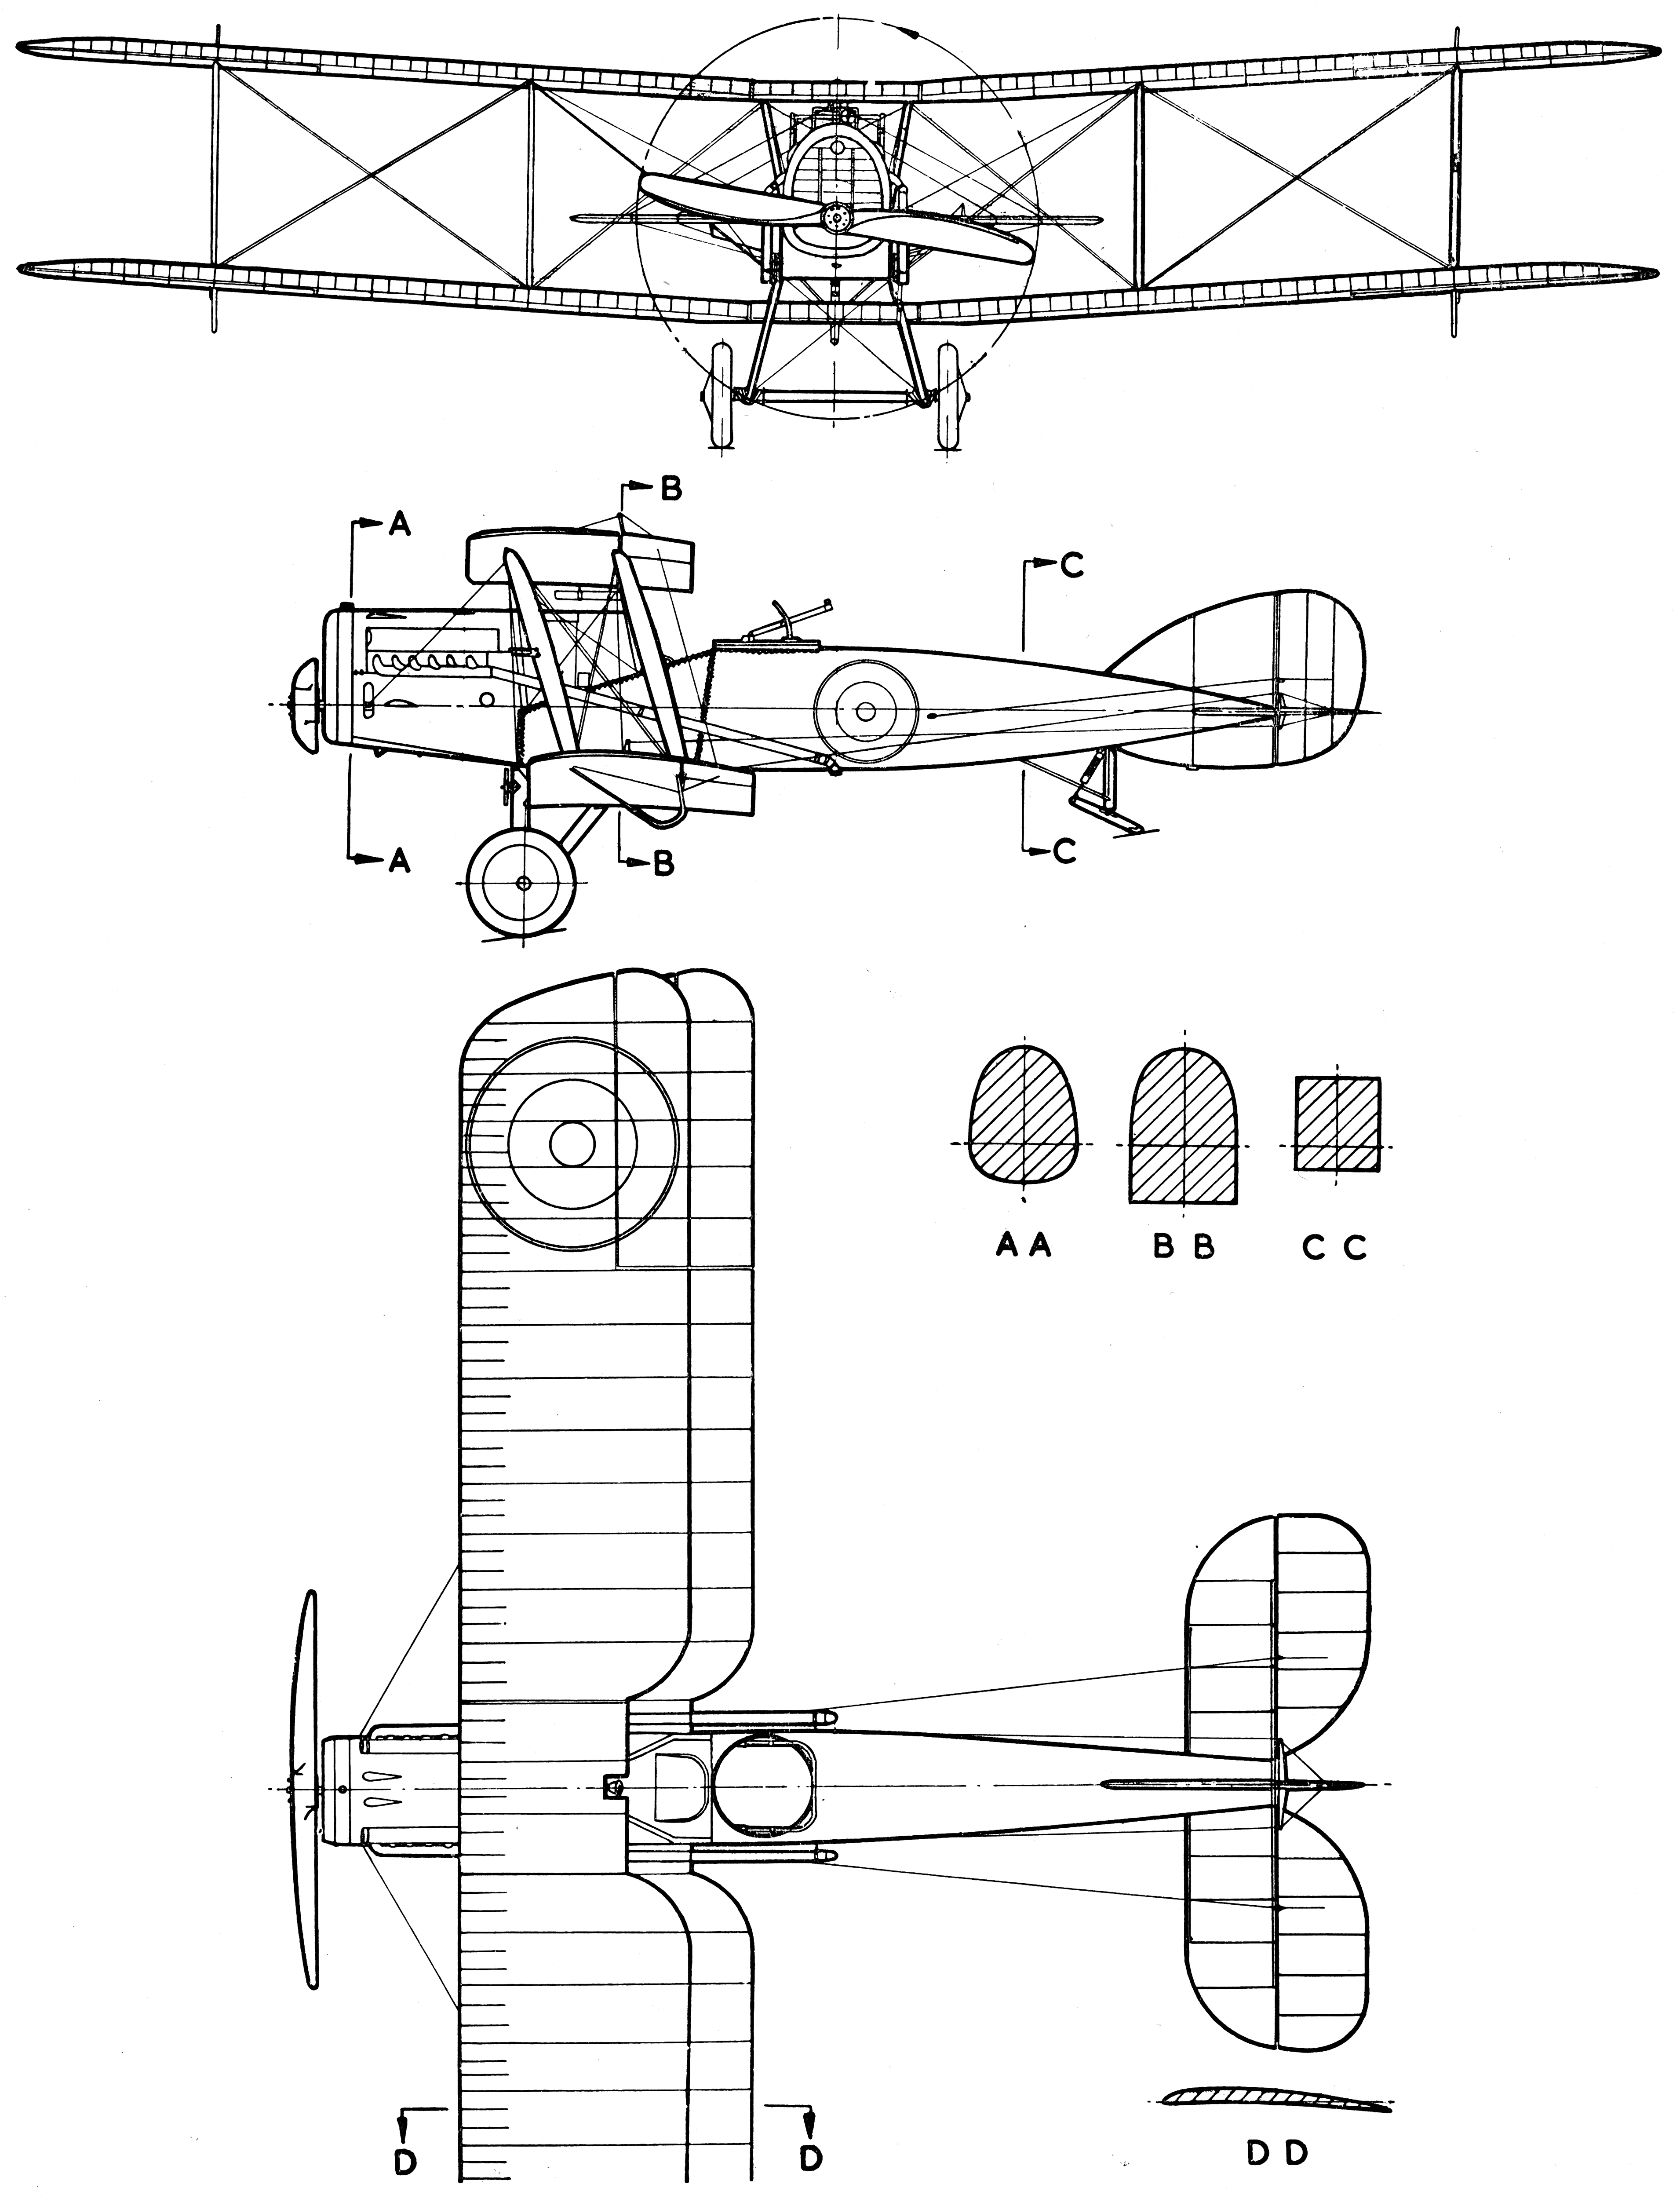 Bristol F.2 Fighter blueprint